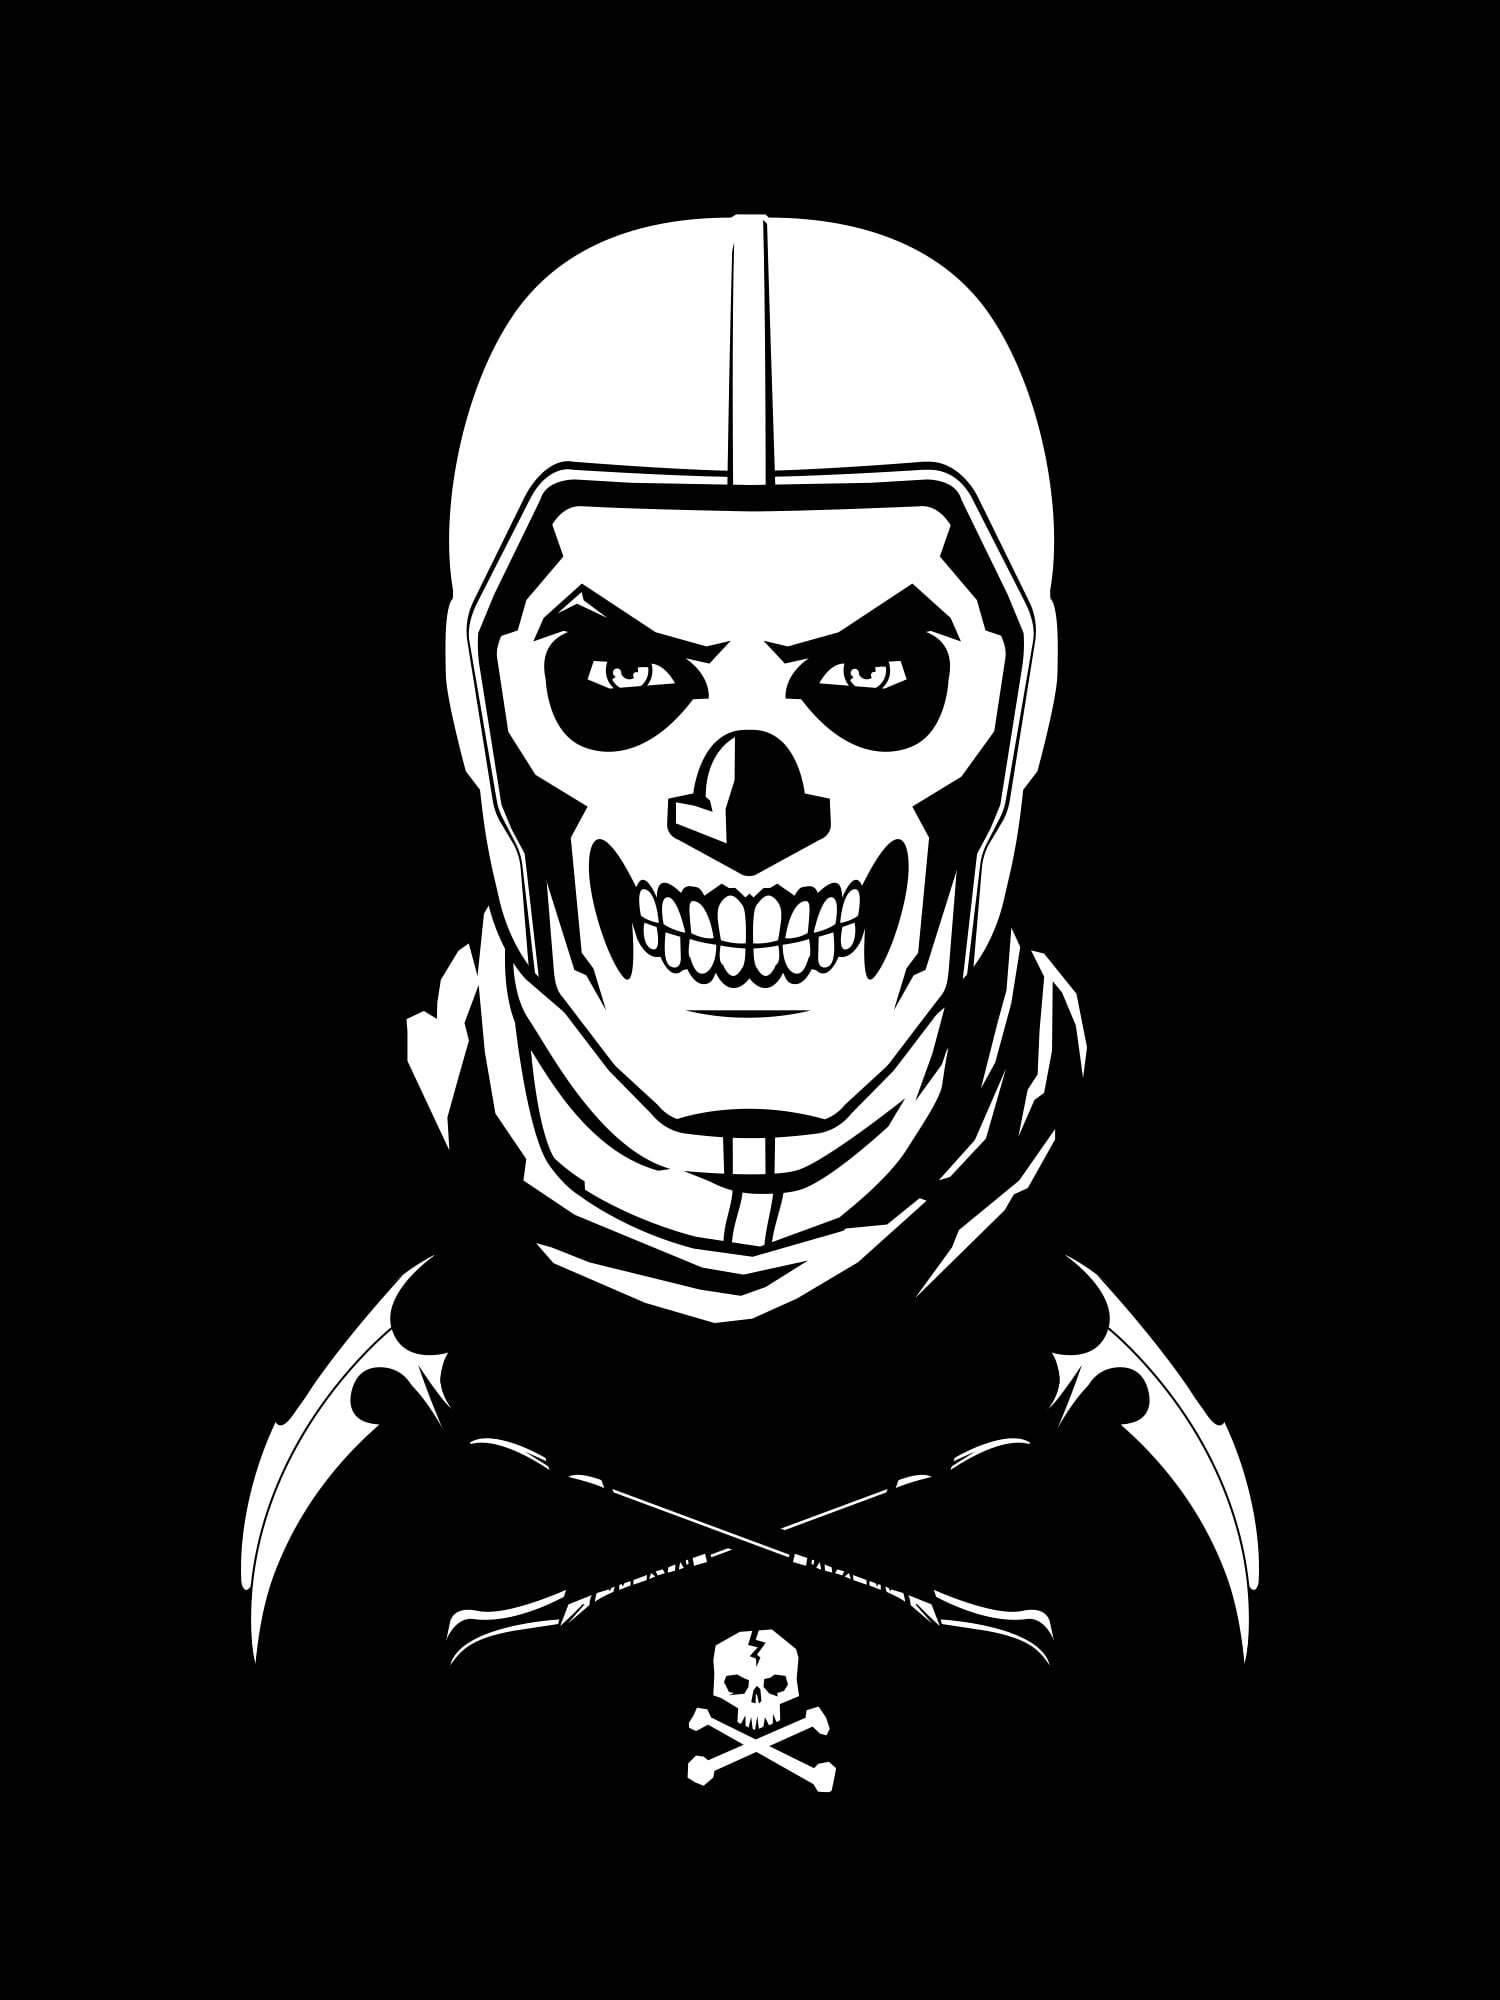 Fortnite Boys T Shirt Tee Sz XL Skull Trooper Long Sleeve Black